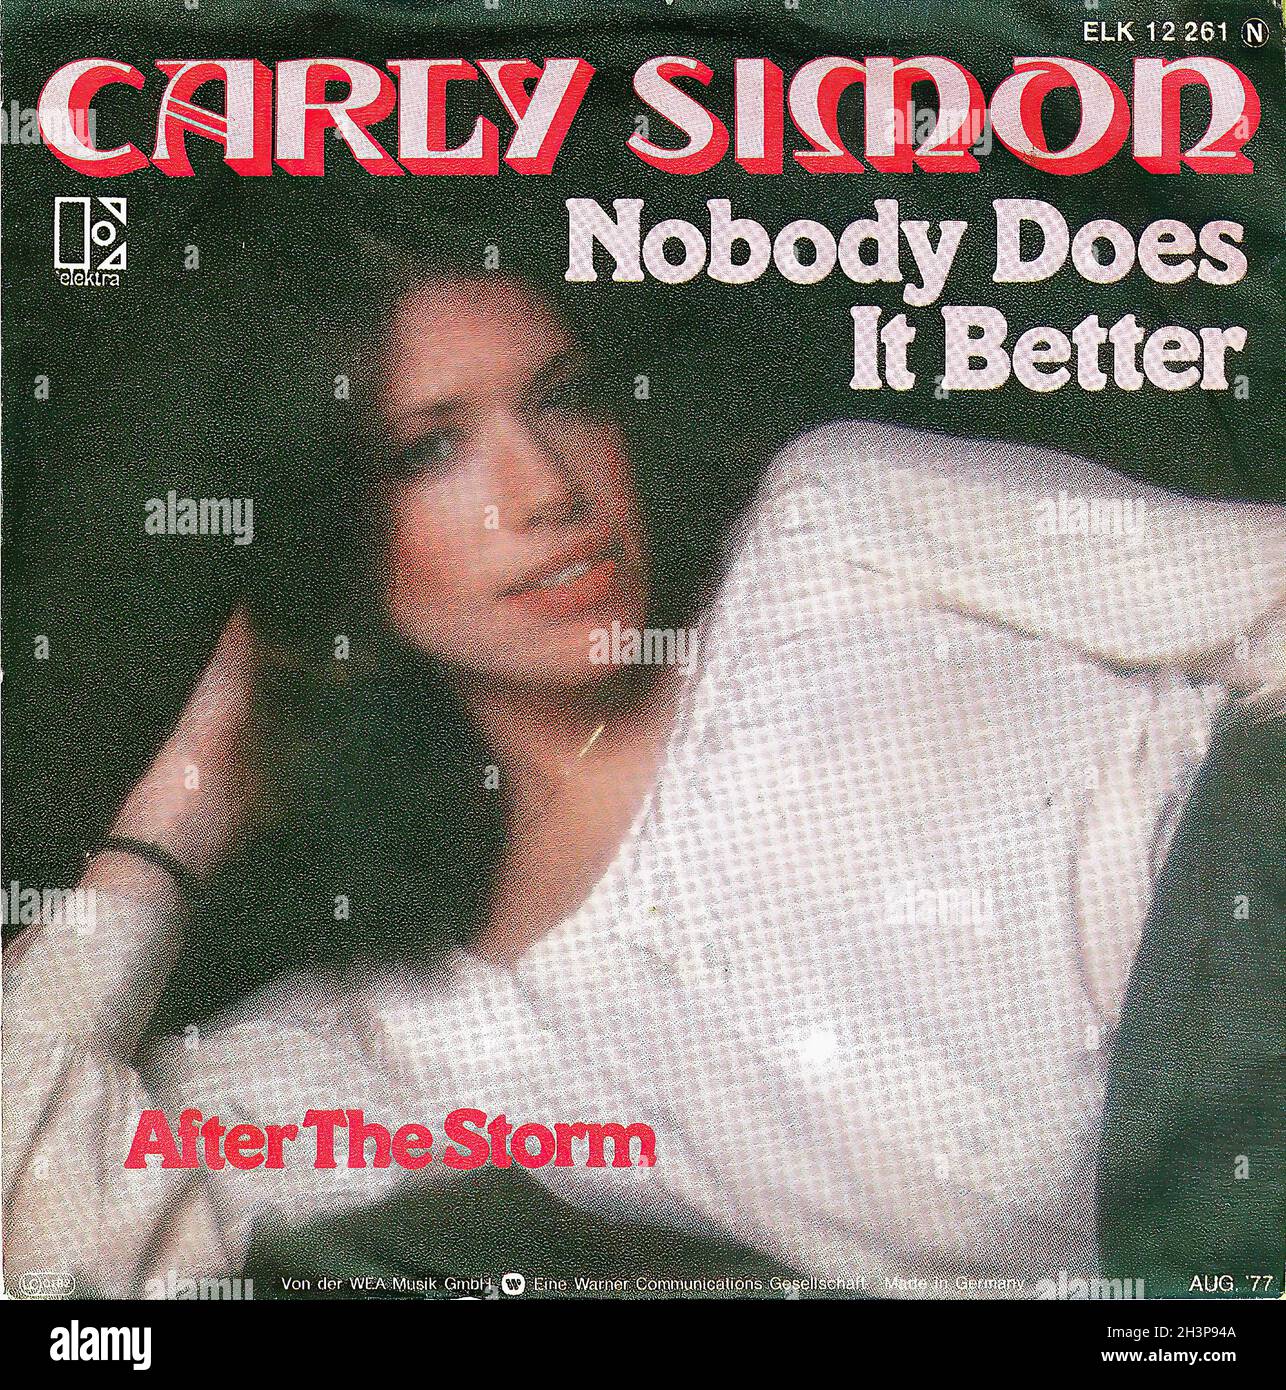 Vintage Vinyl Recording - The Spy Who Loved Me - Der Spion der Mich liebte - James Bond Soundtrack - Carly Simon - Nobody Does It Better - D - 1977 02 Stock Photo